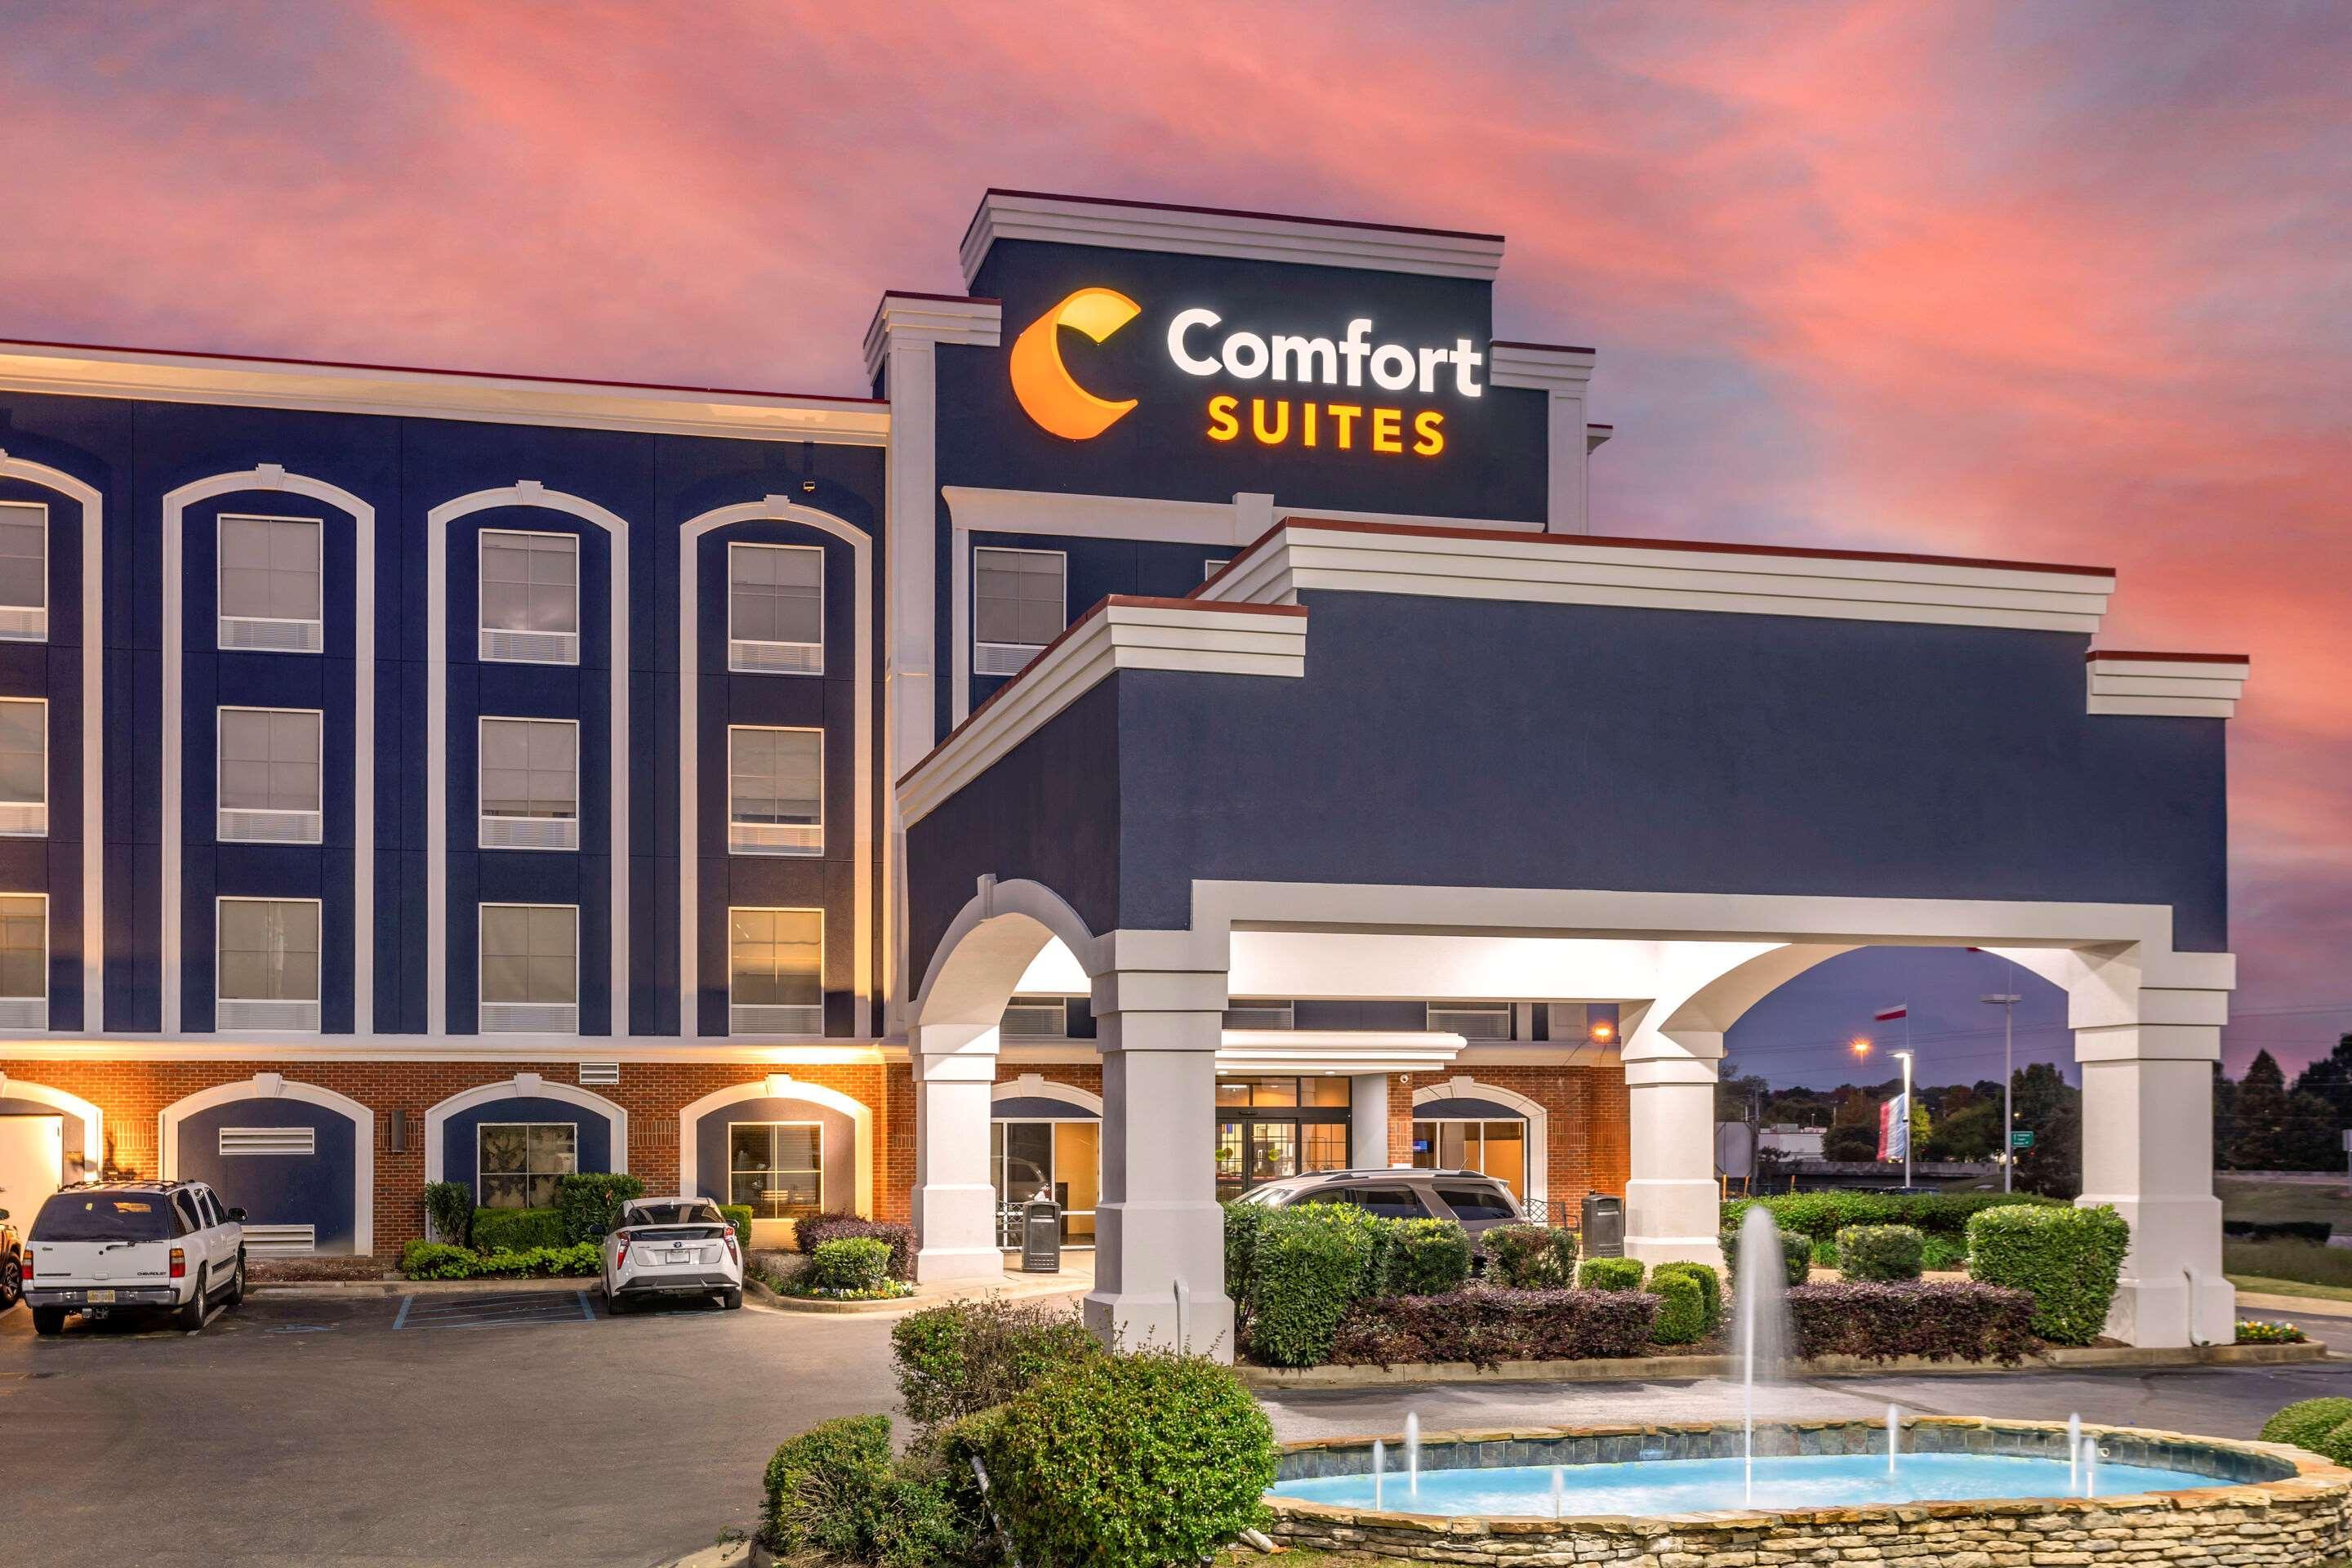 Book Comfort Inn Hotels in Sterling, VA - Choice Hotels